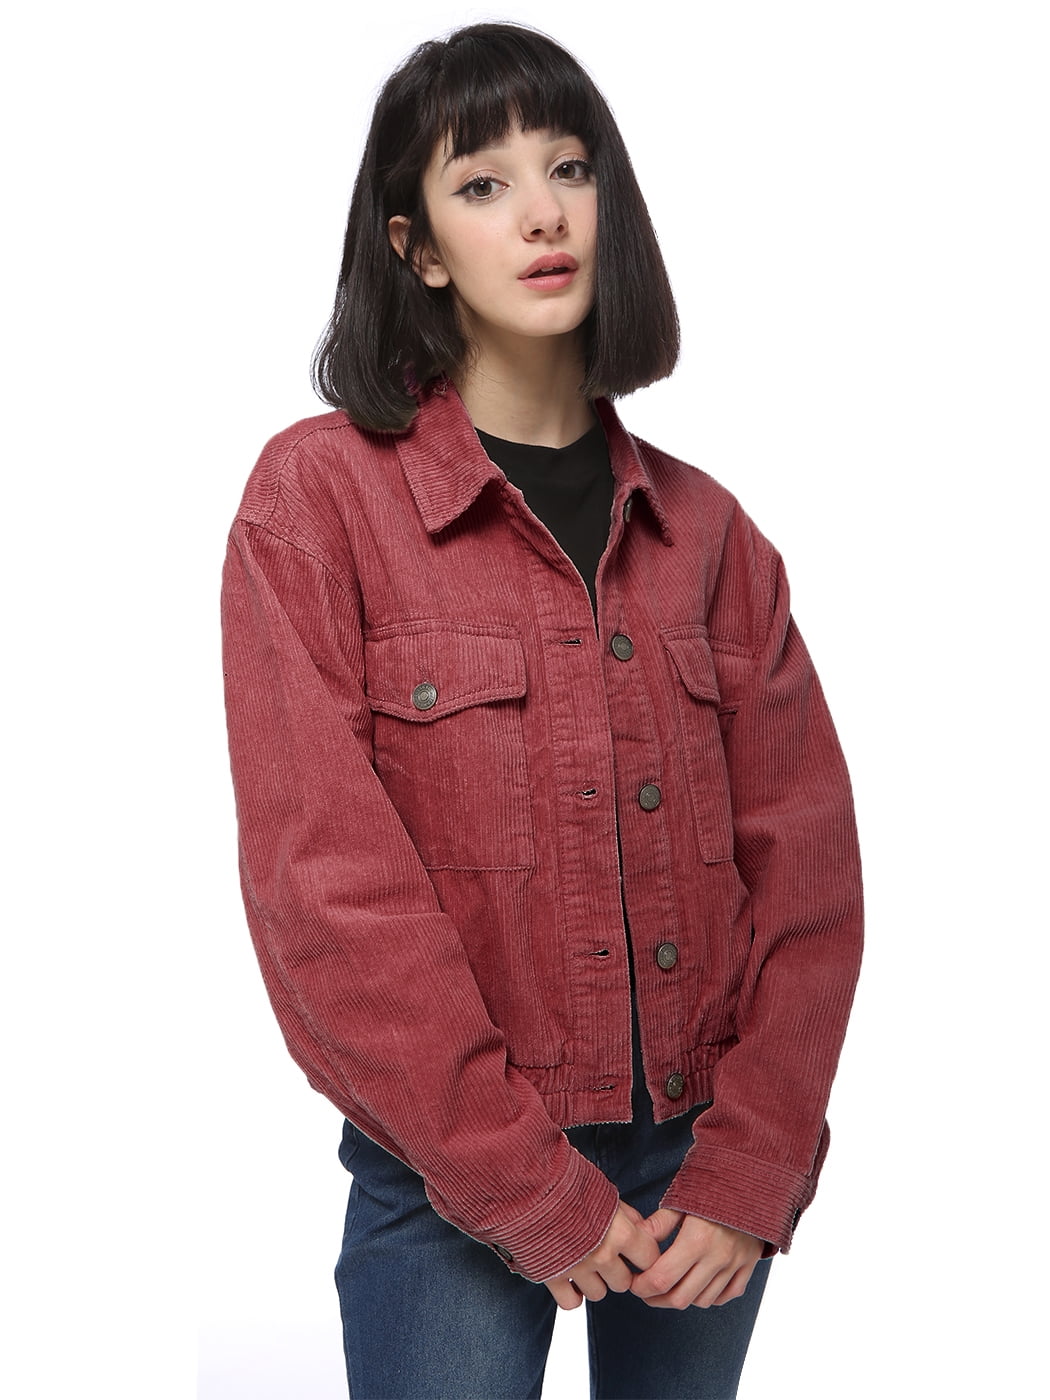 Women's Patchwork Corduroy Jacket,Button Down Boyfriend Long Sleeve Oversized Shirts Blouses Tops Coat 